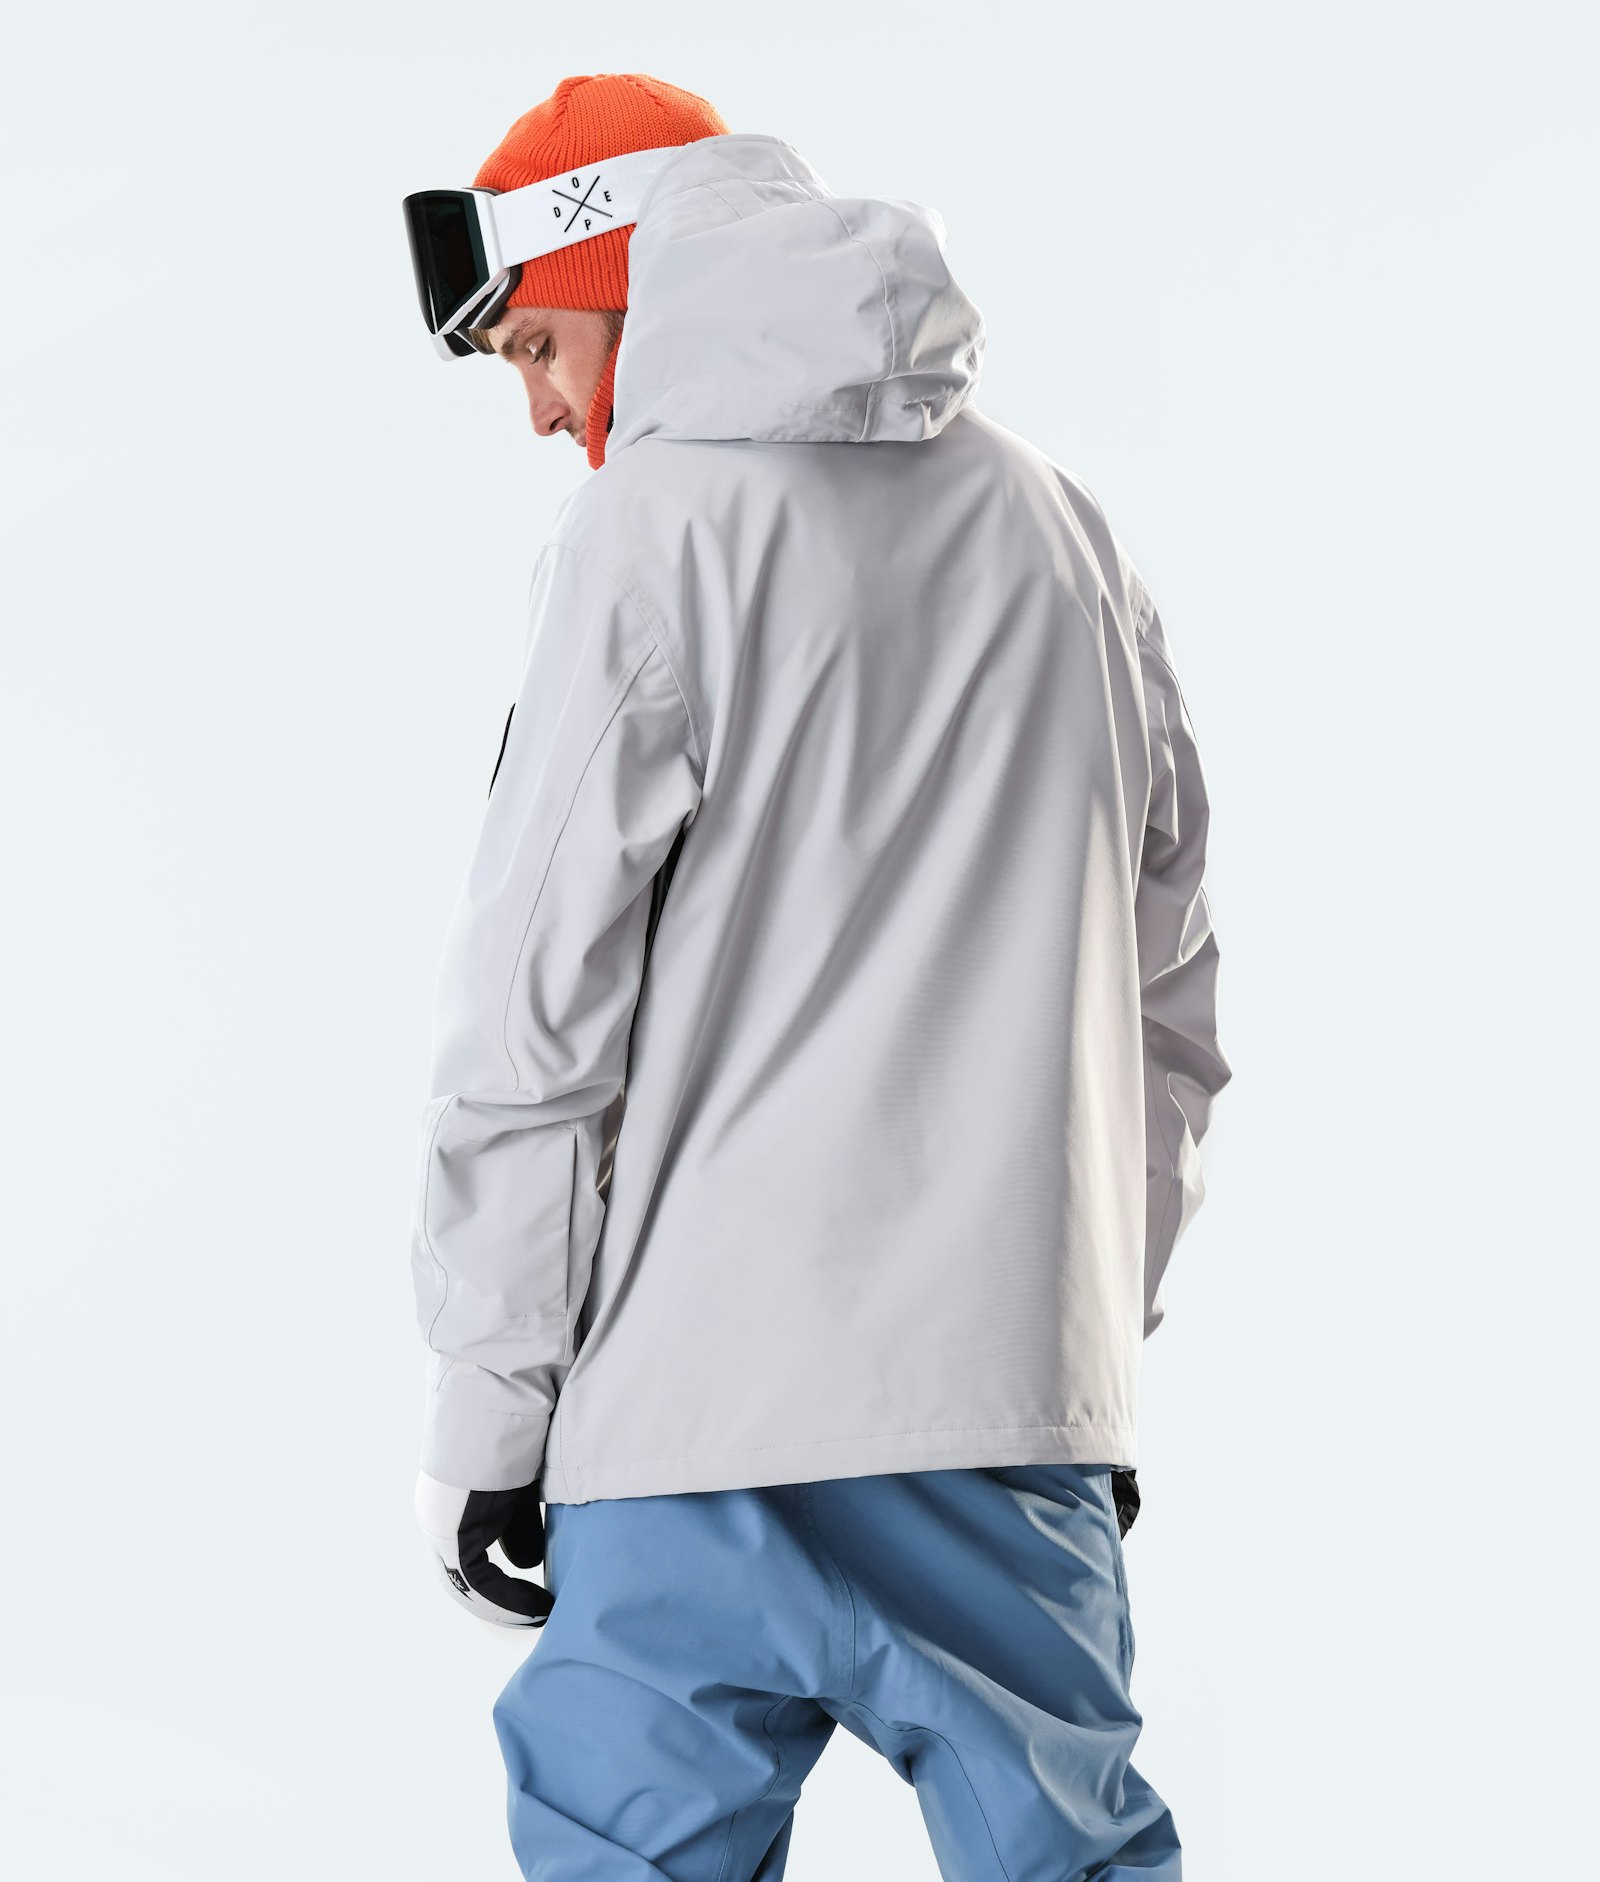 Dope Blizzard 2020 Snowboard Jacket Men Light Grey